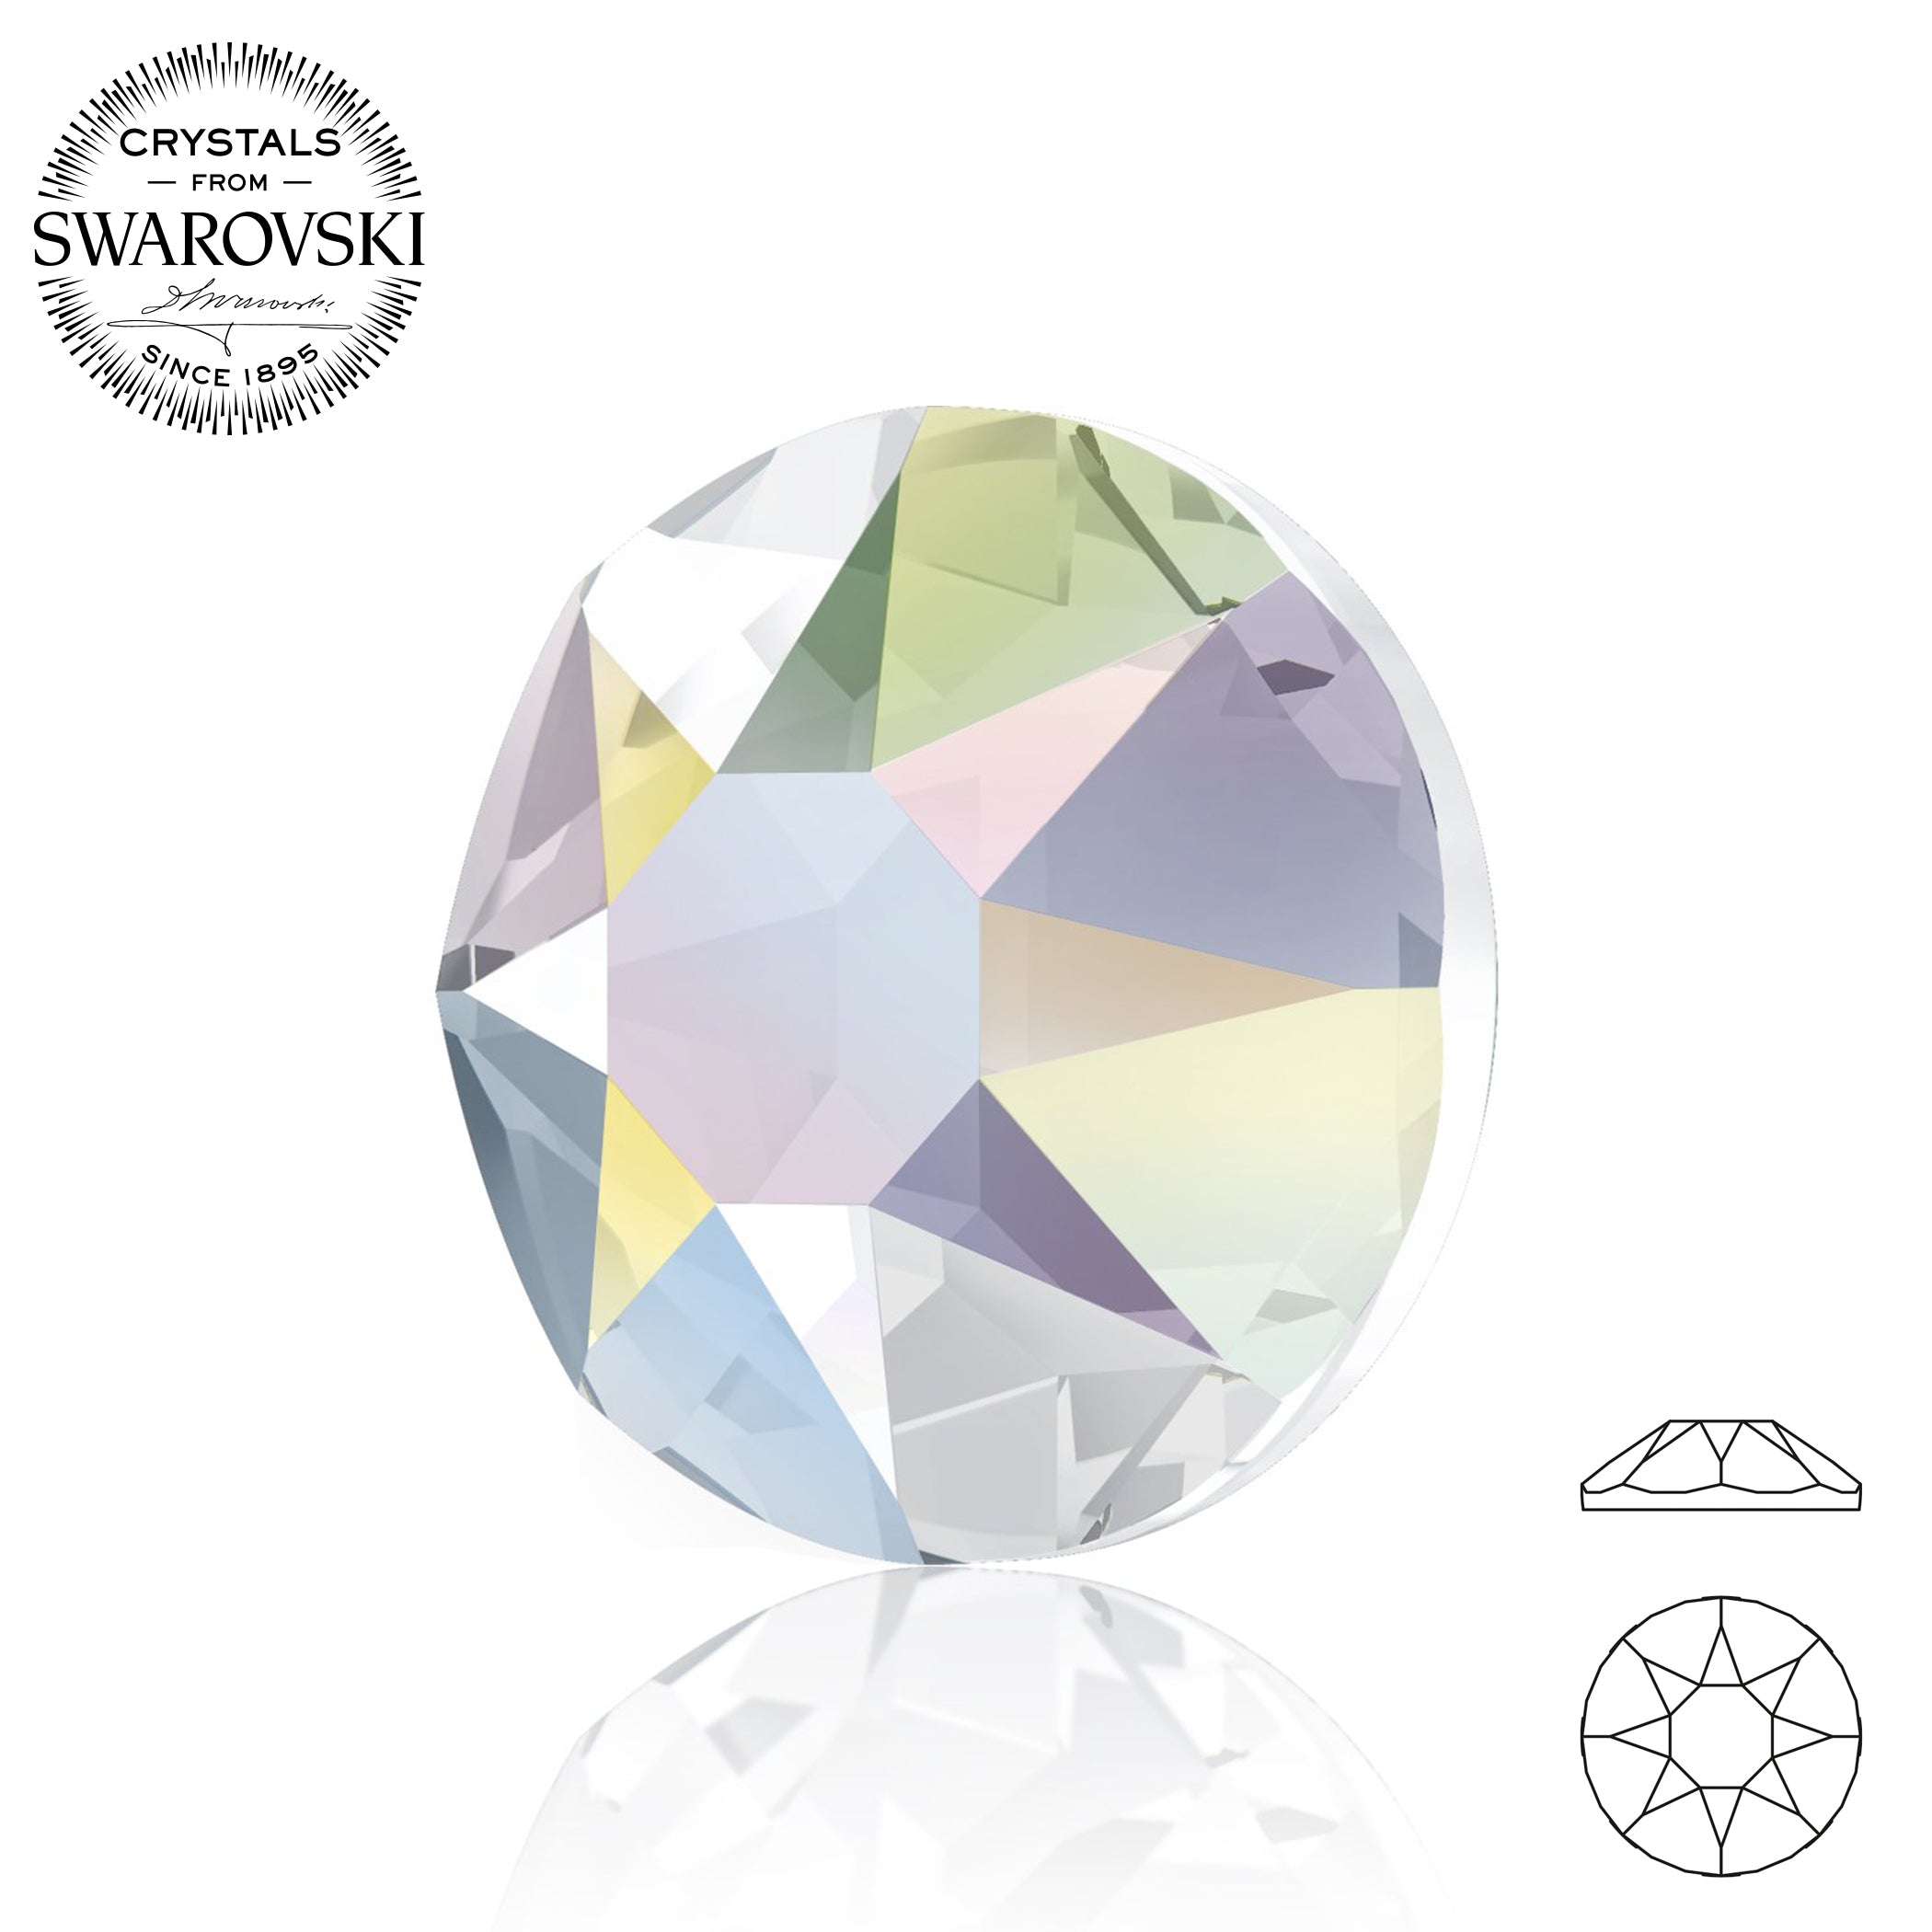 Crystal AB Size Mix of Swarovski® Flatback Crystals No Hotfix